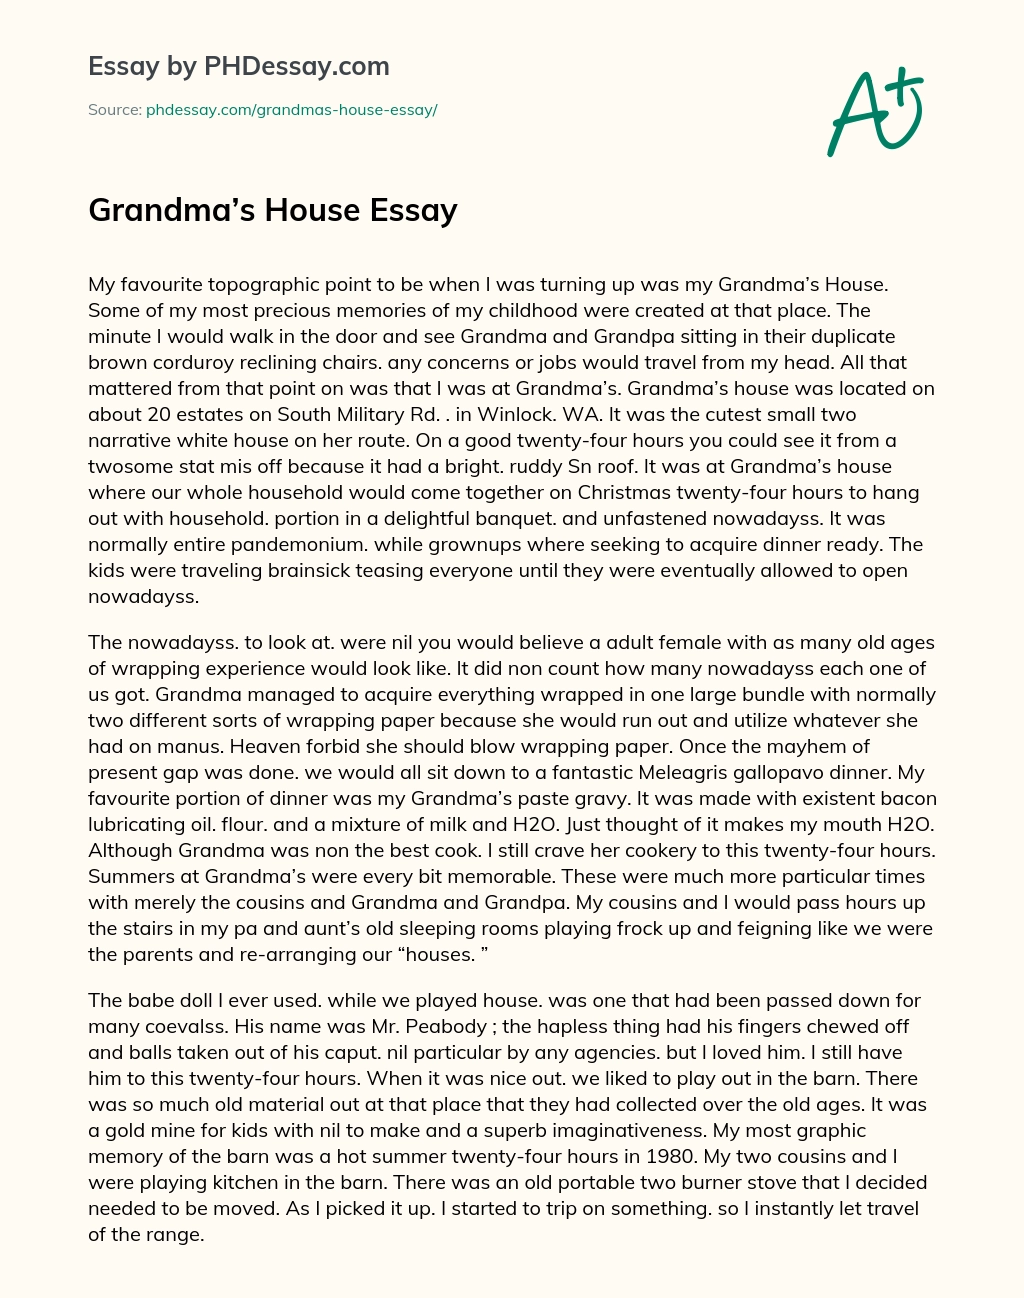 Grandma’s House Essay essay